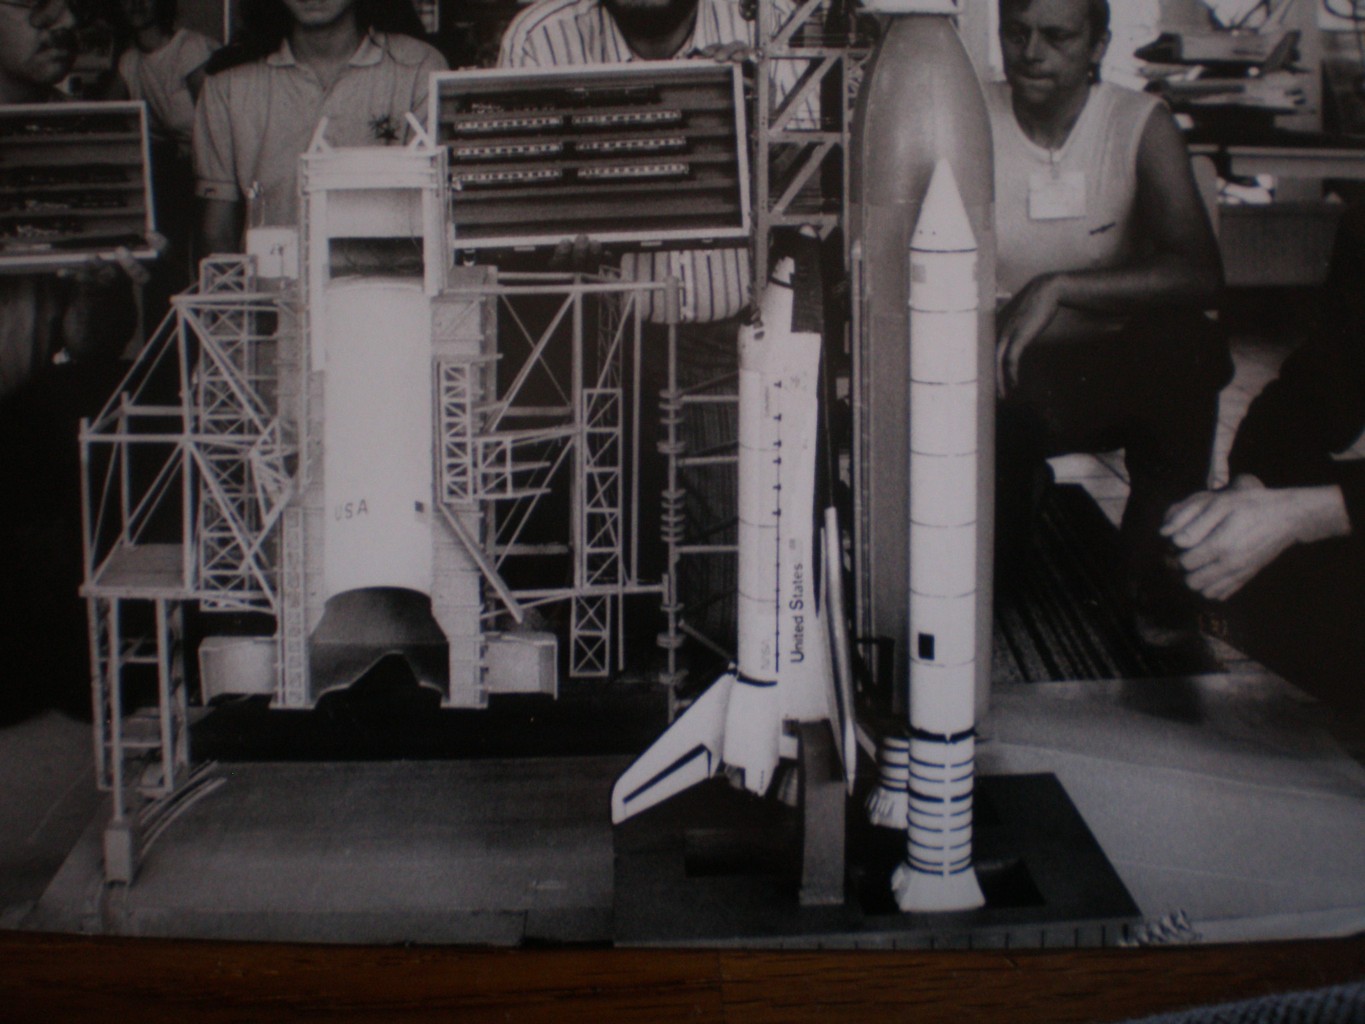 Space  Shuttle 1:72 Pressefoto zum Projeckt